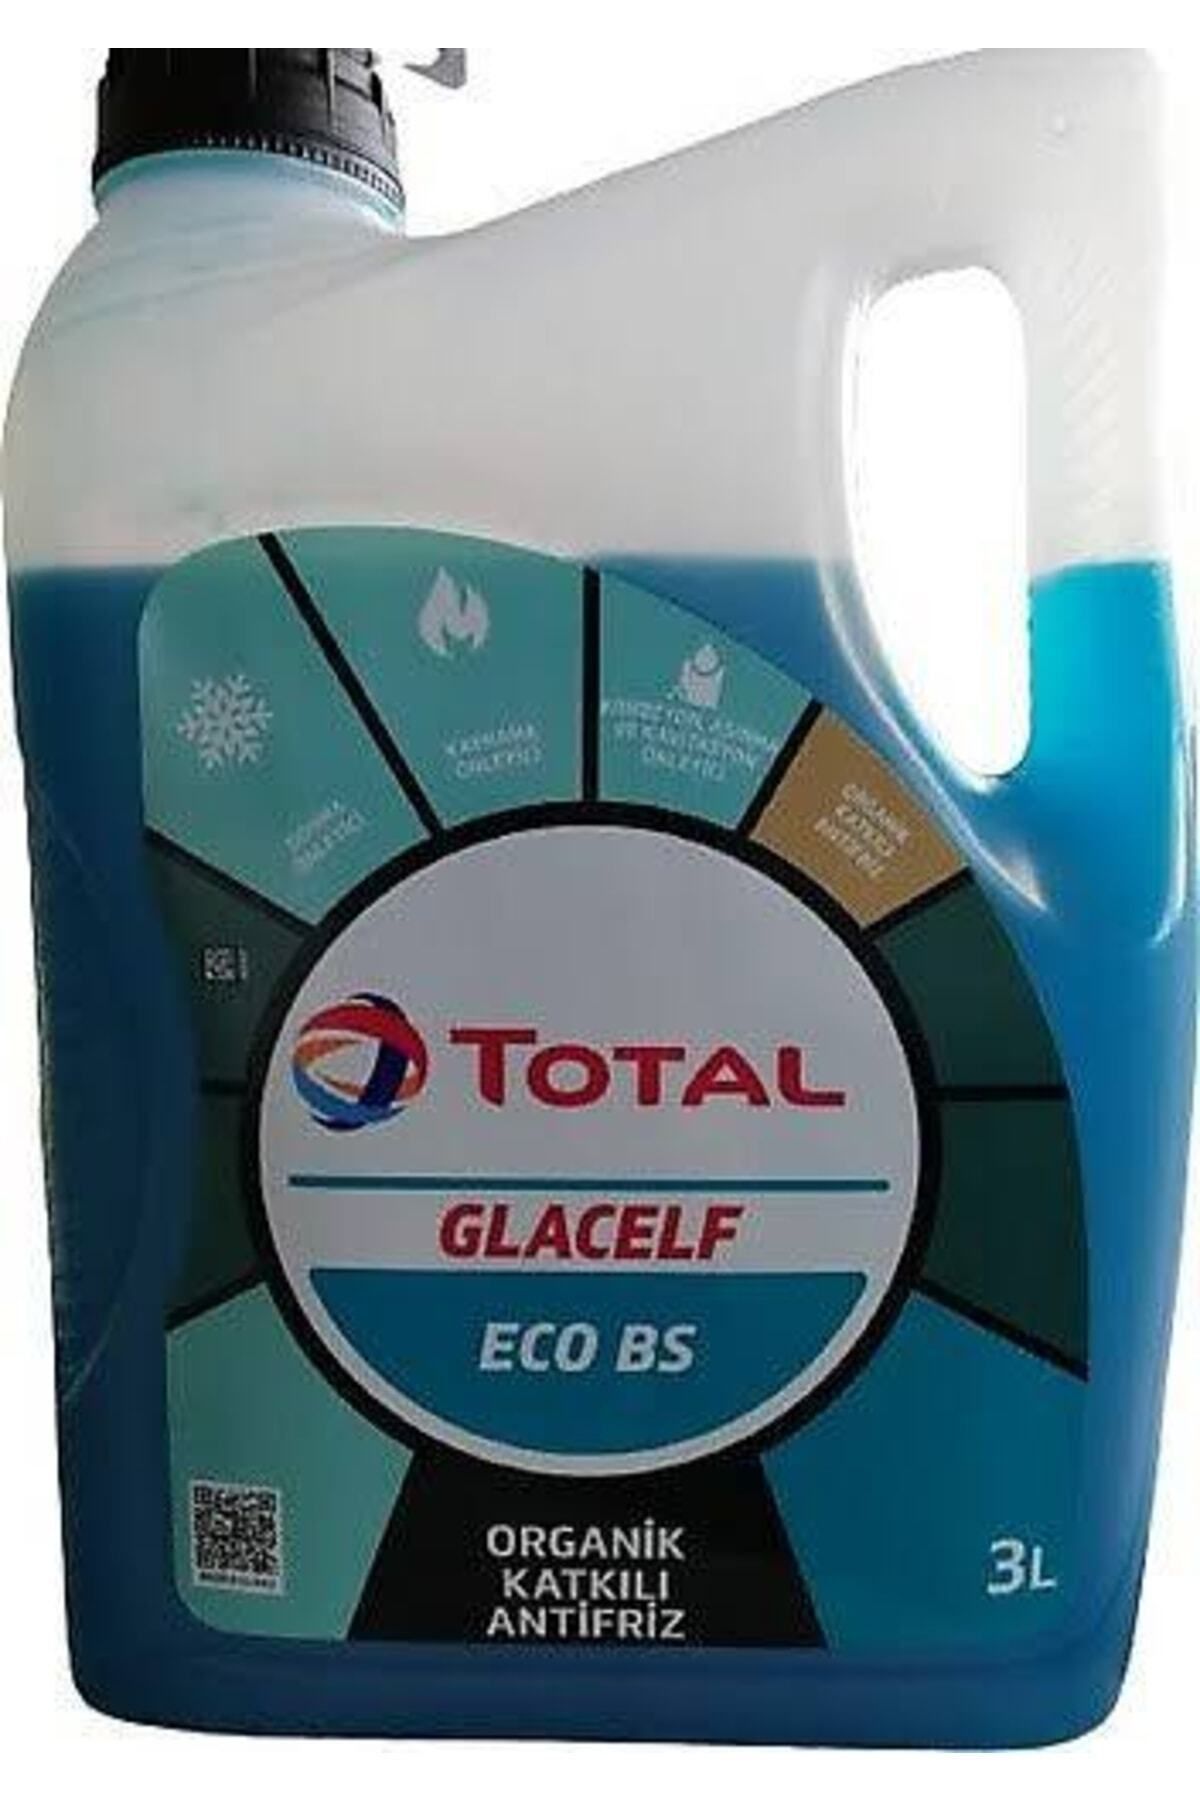 Total Glacelf Eco Bs Organik Katkılı Antifiriz 3 Litre